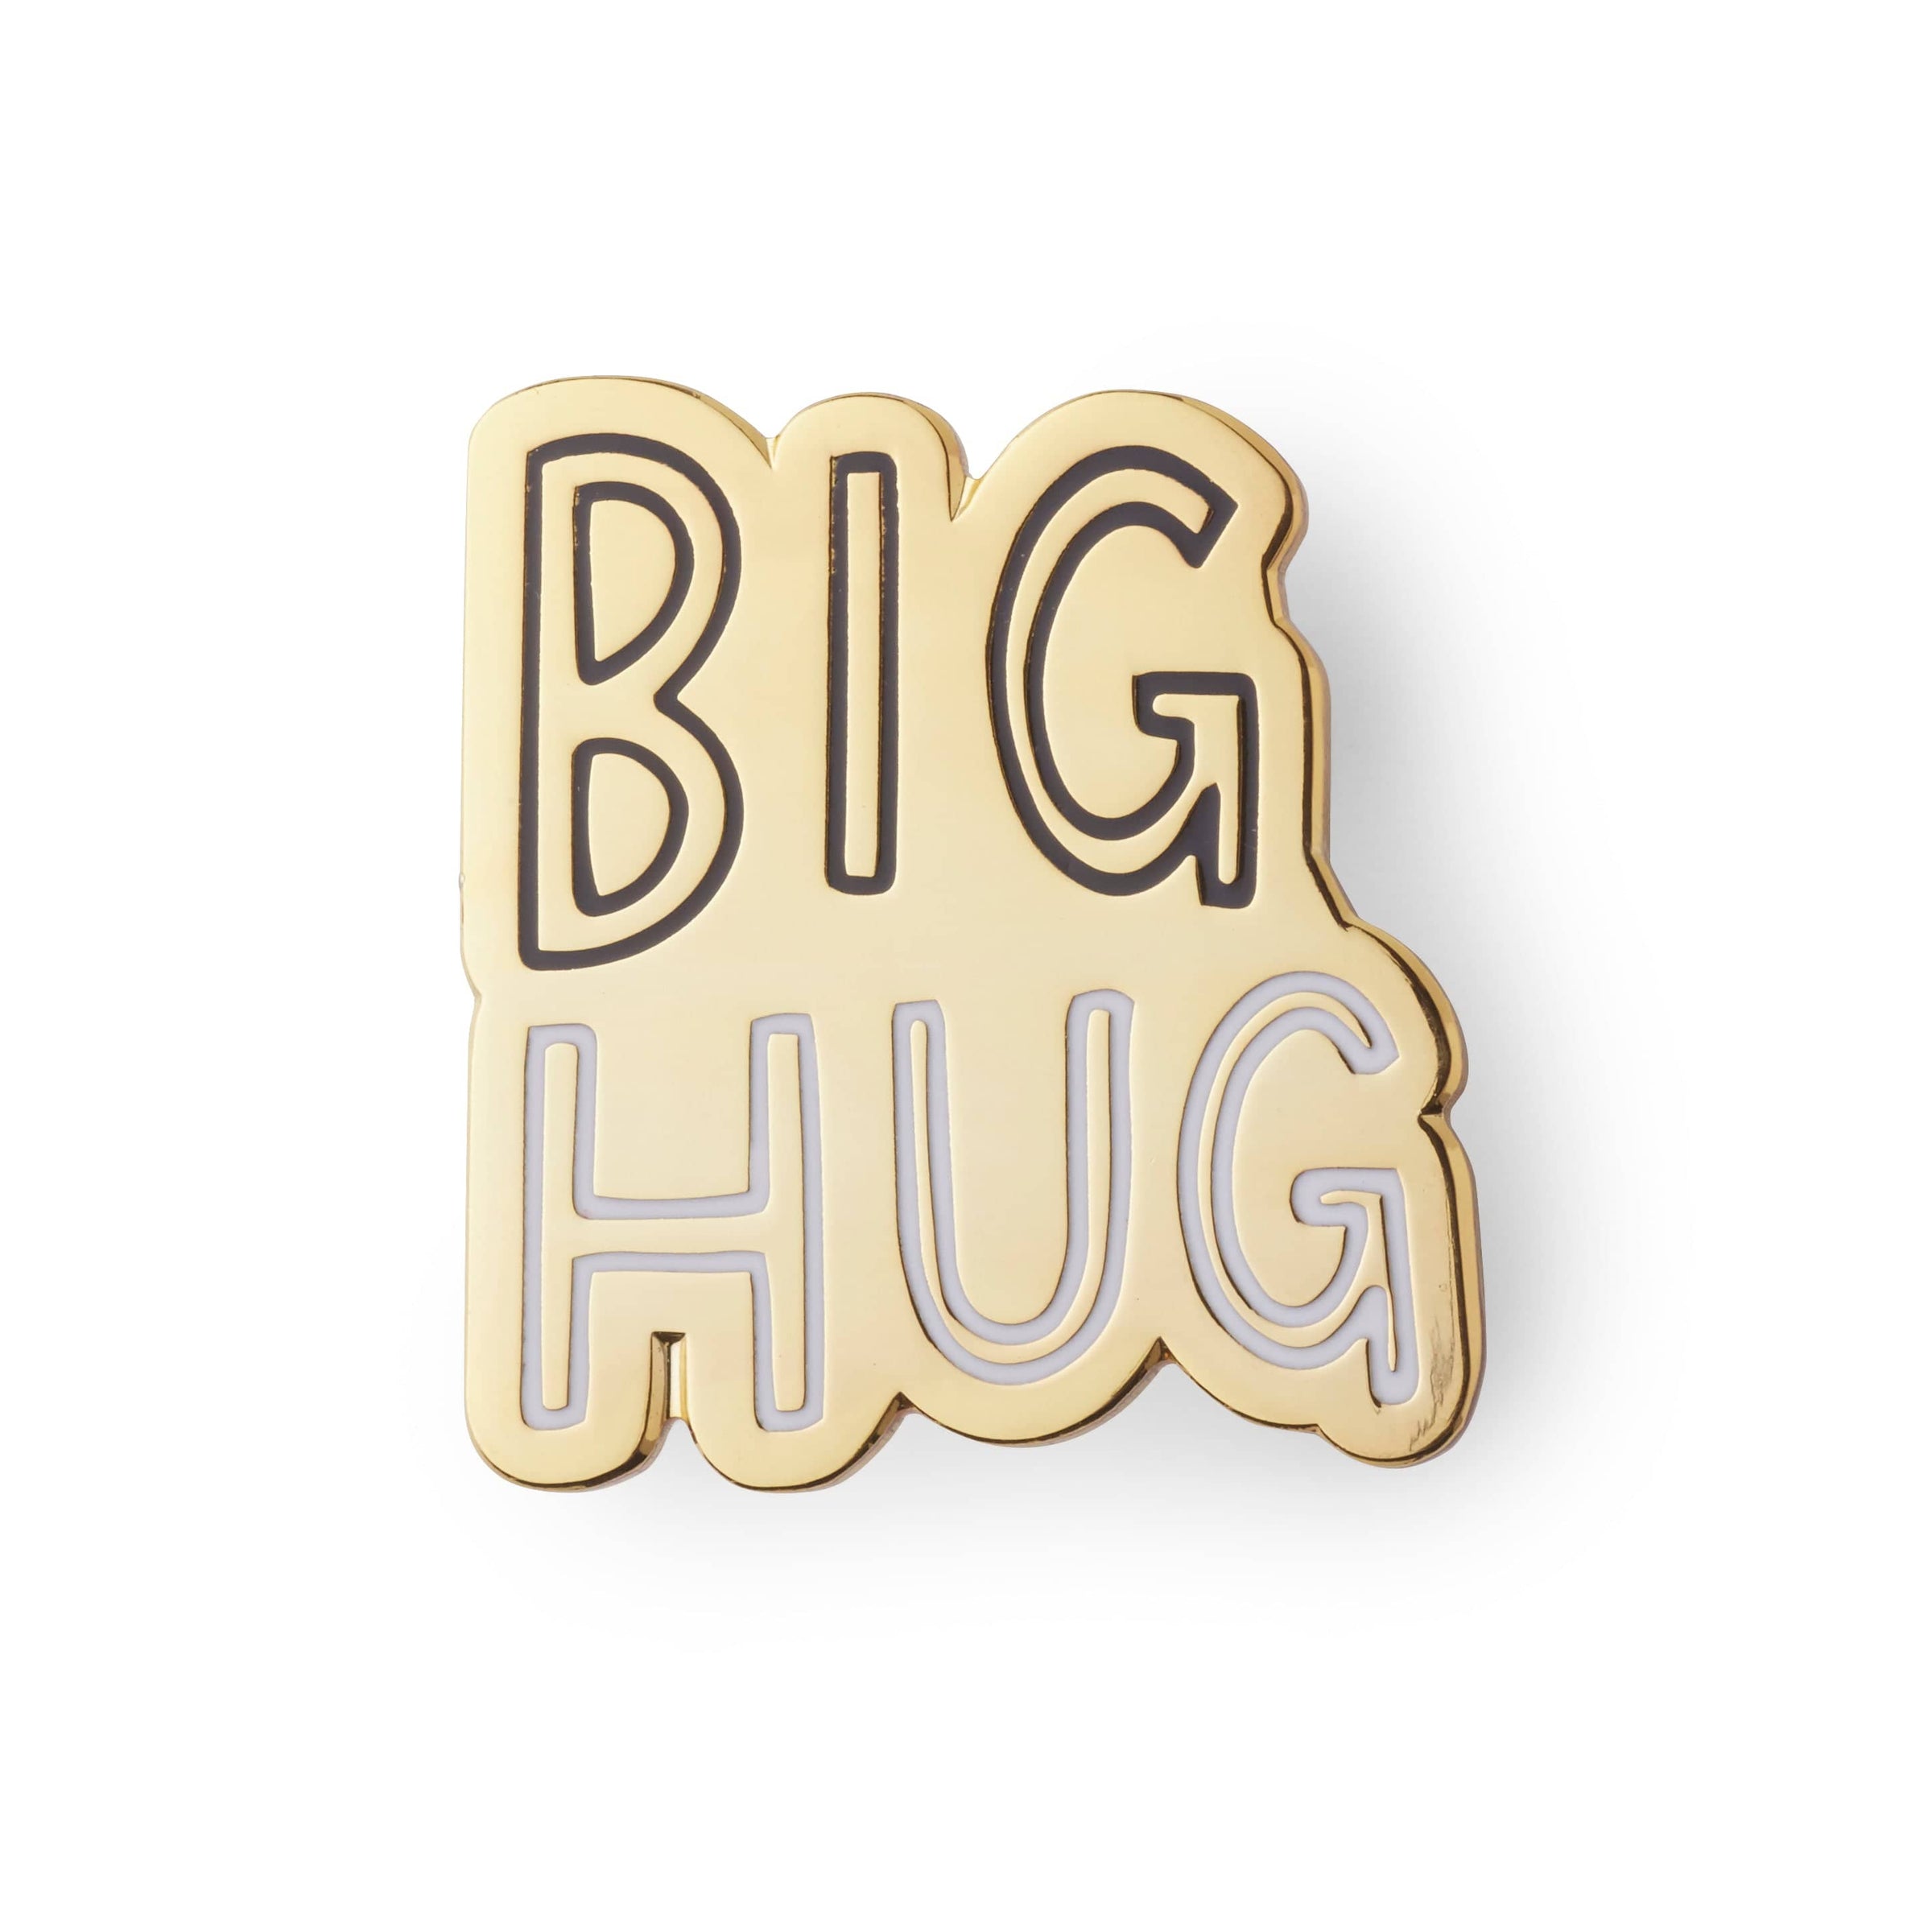 "Big Hug" Enamel Pin Badge